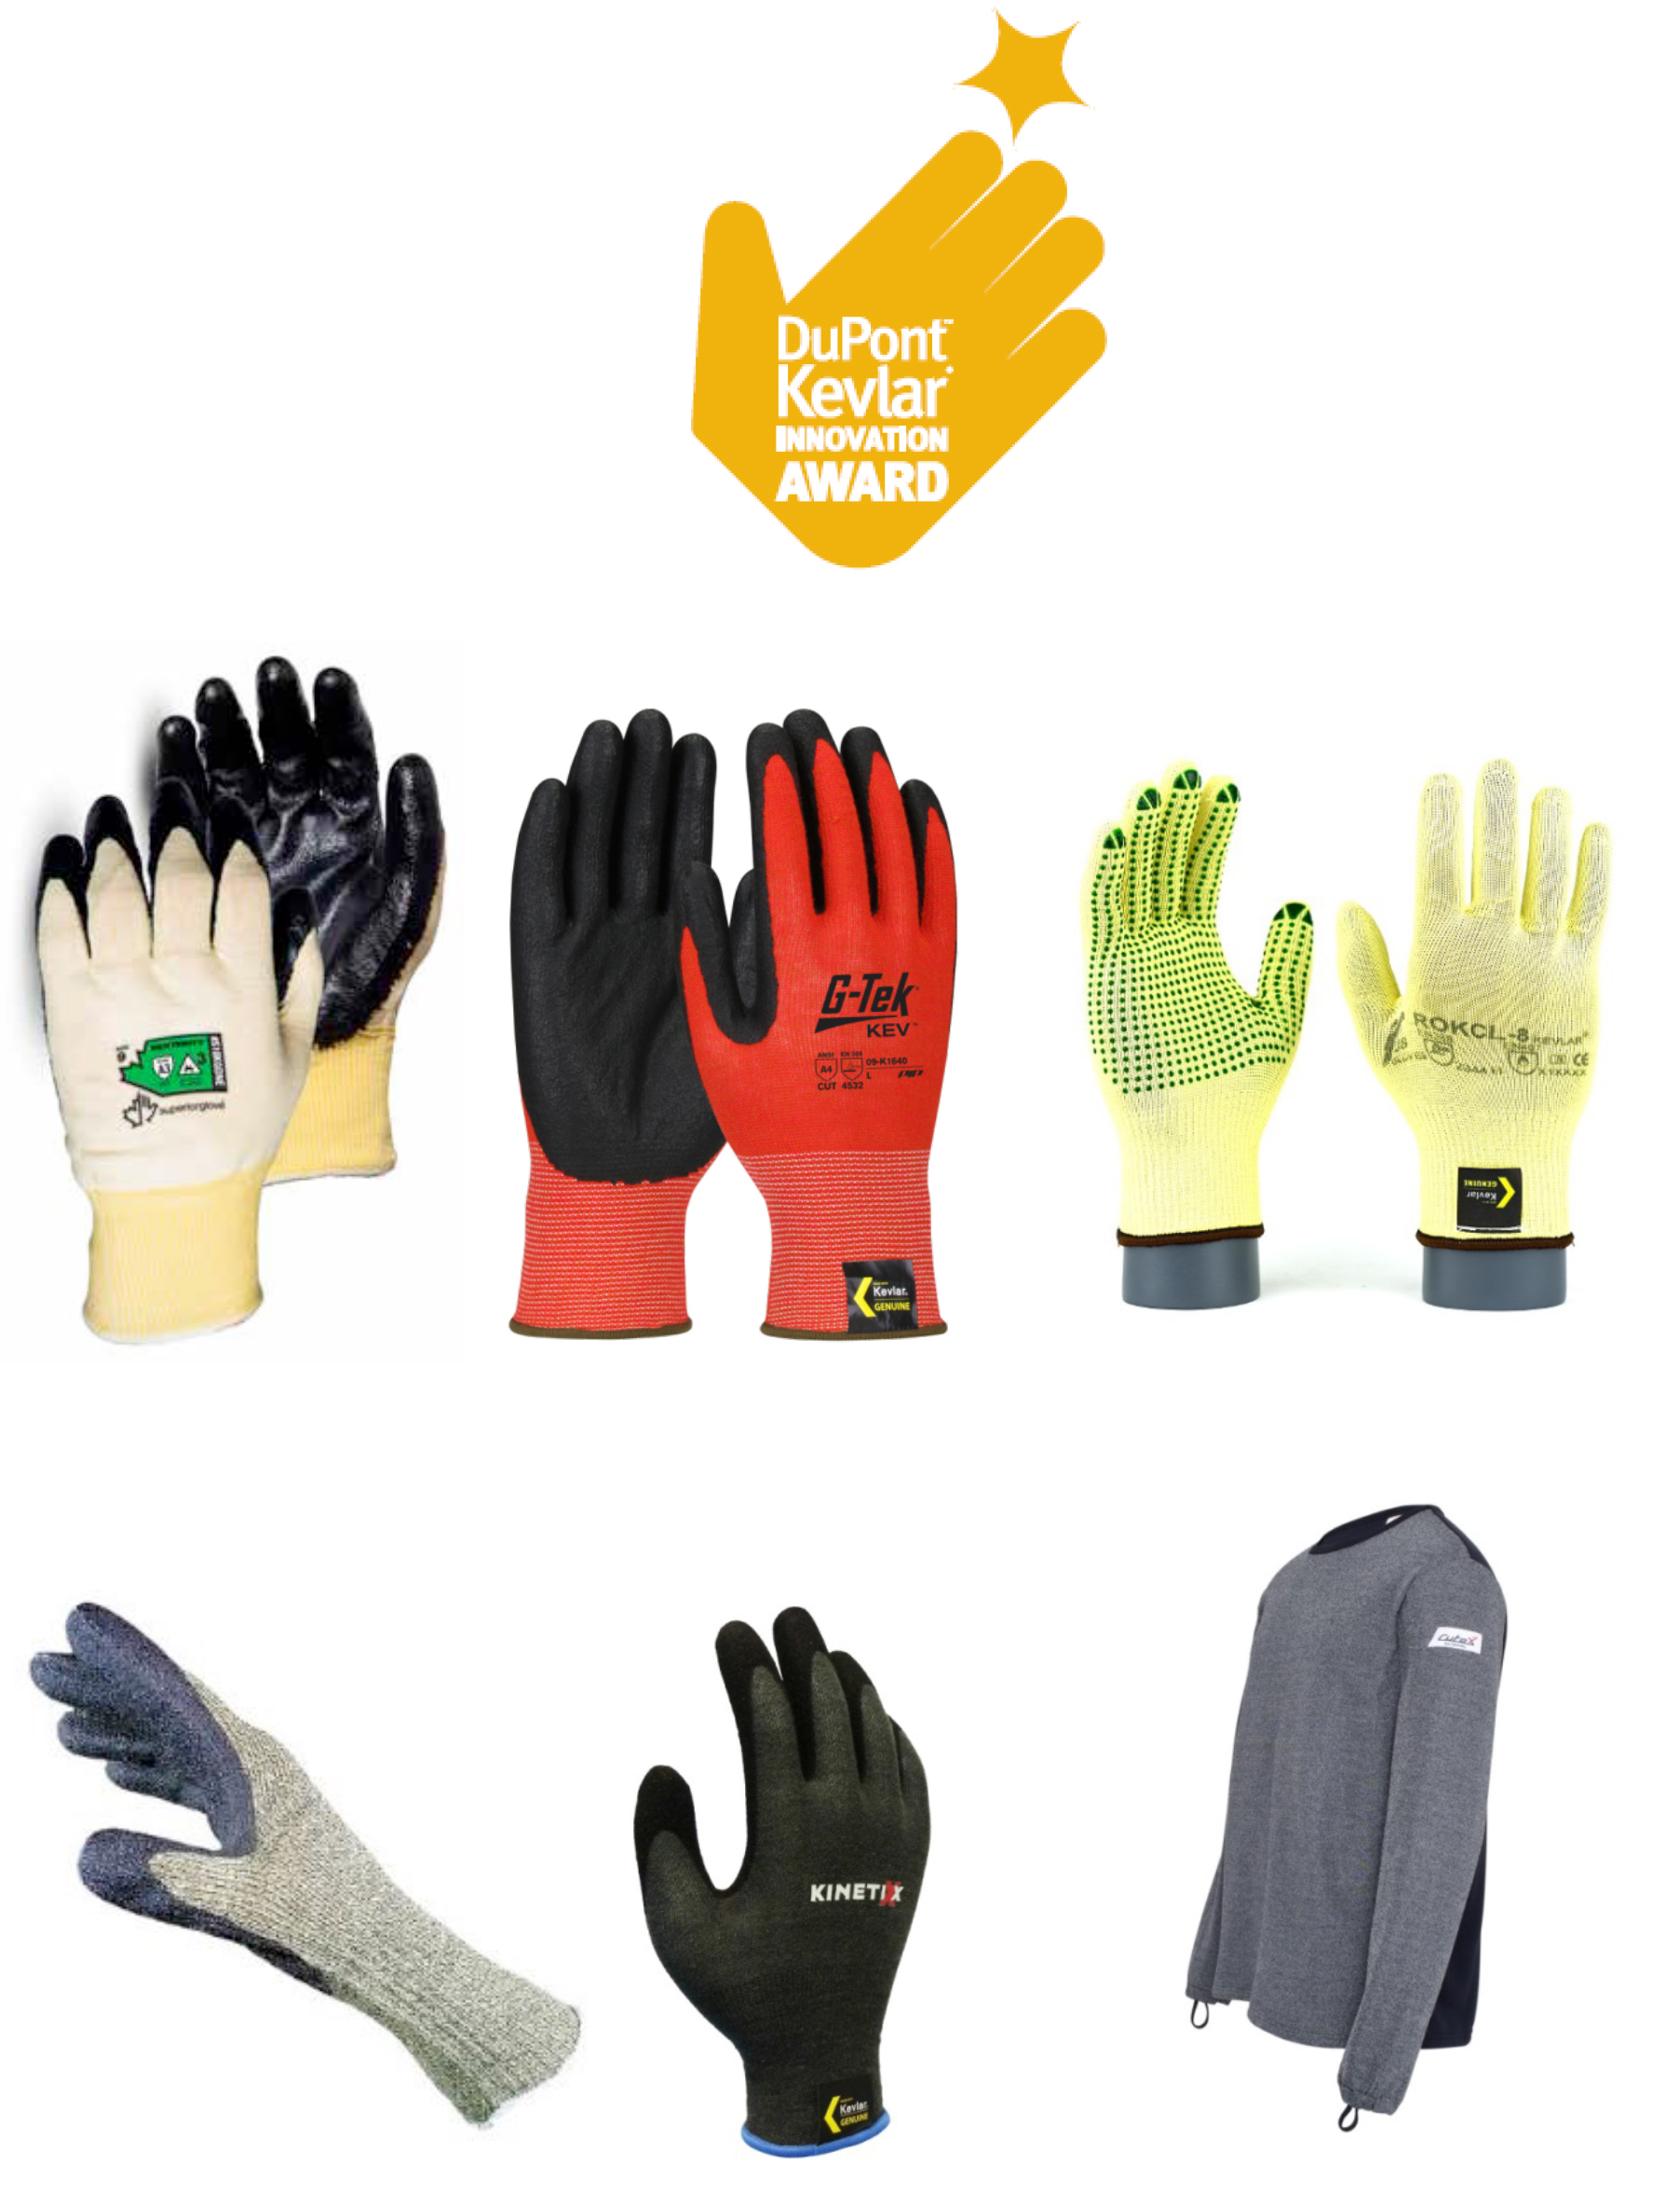 European 2018 DuPont™ Kevlar® Glove Innovation Award Winners